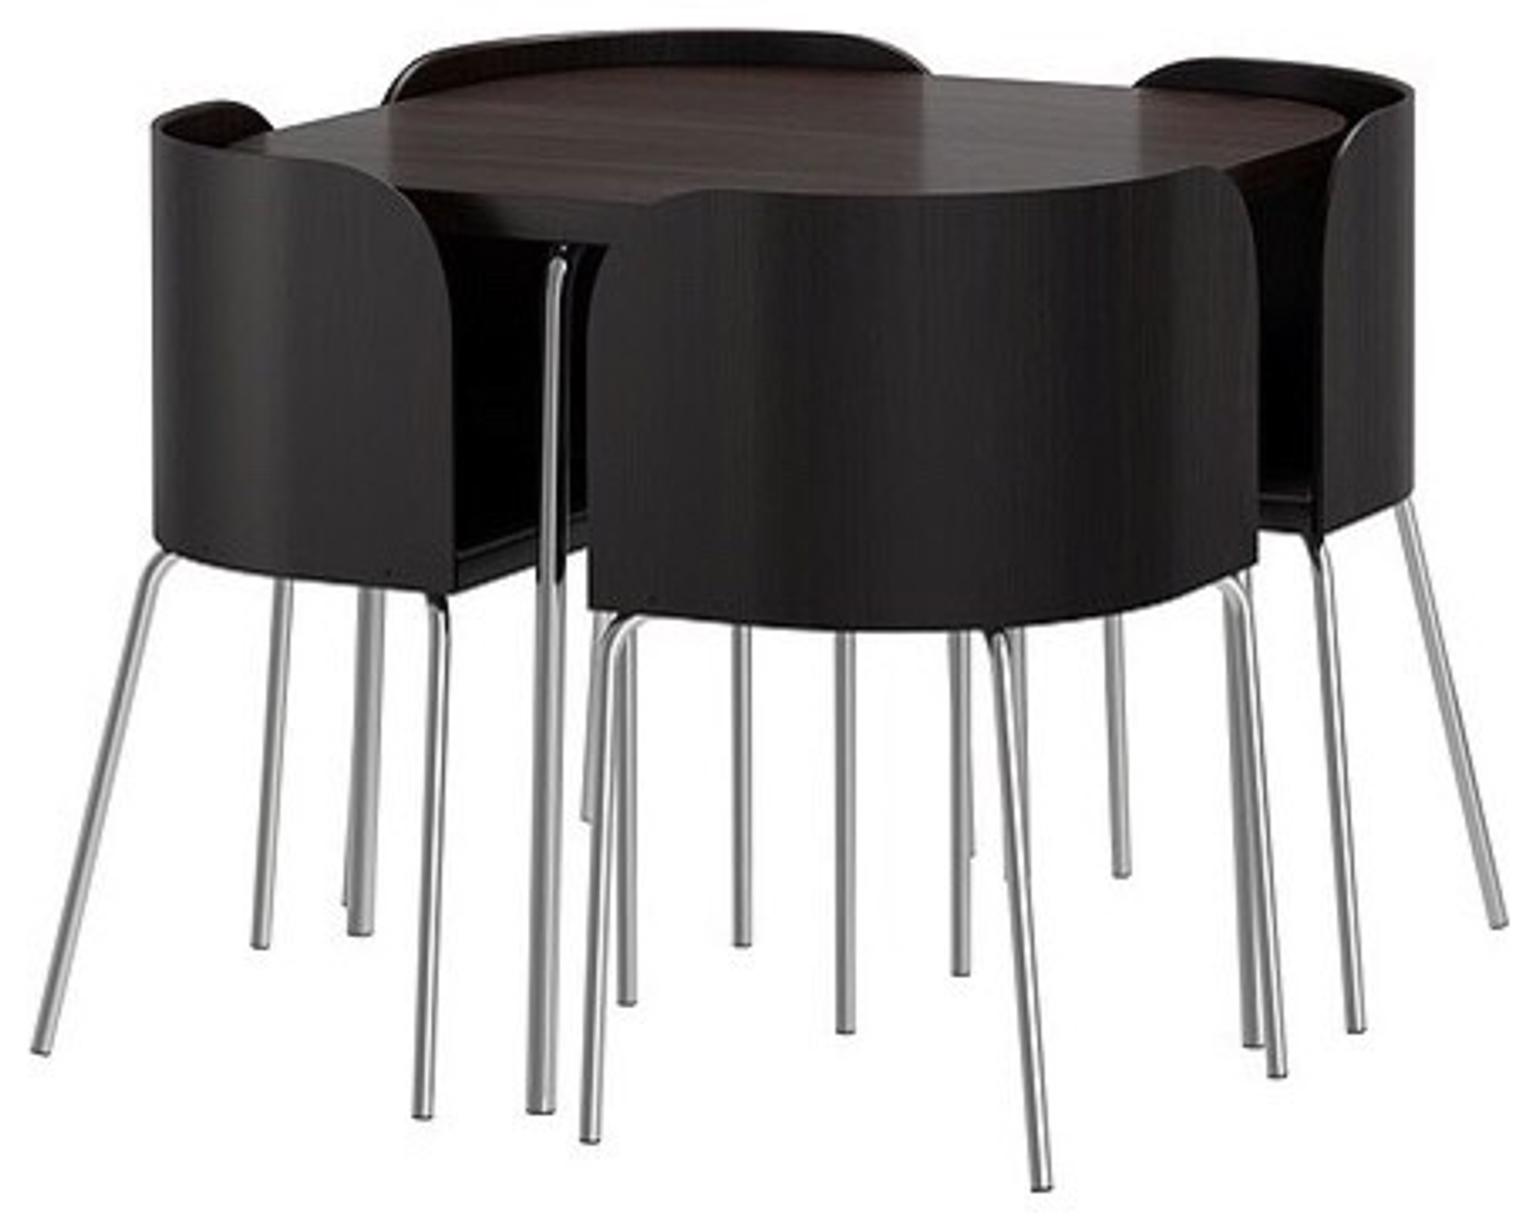 Ikea Fusion Space Saving Dining Table Chairs In B93 Dorridge Fur 60 00 Zum Verkauf Shpock At